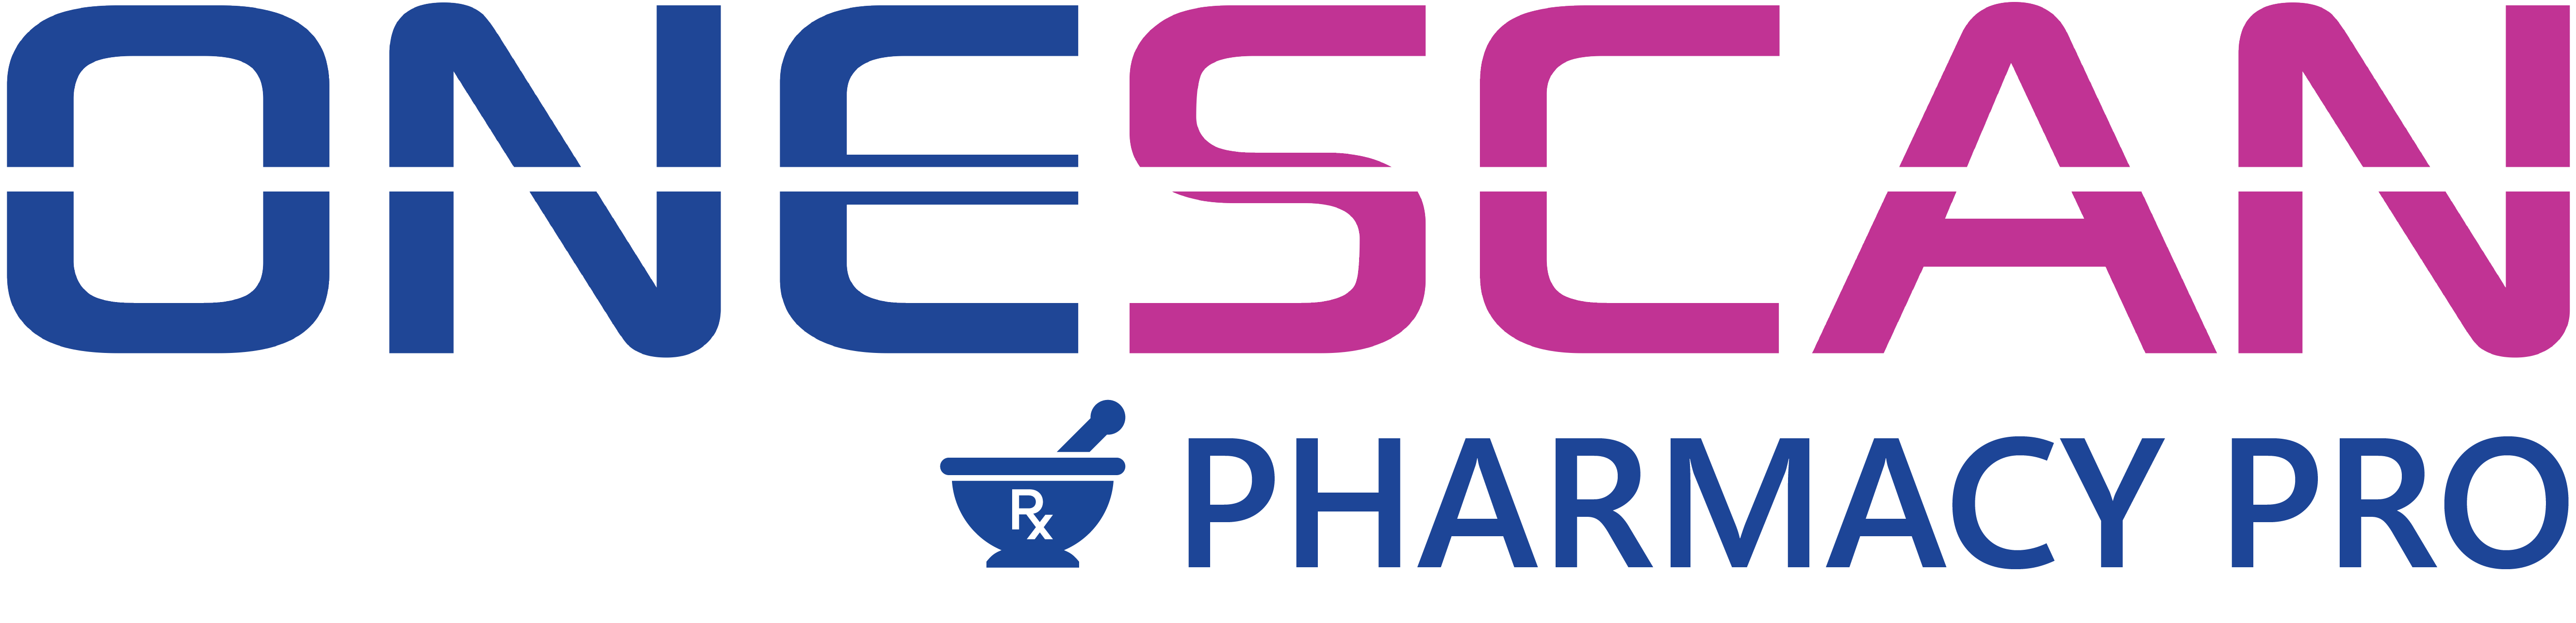 OneScan Pharmacy Pro